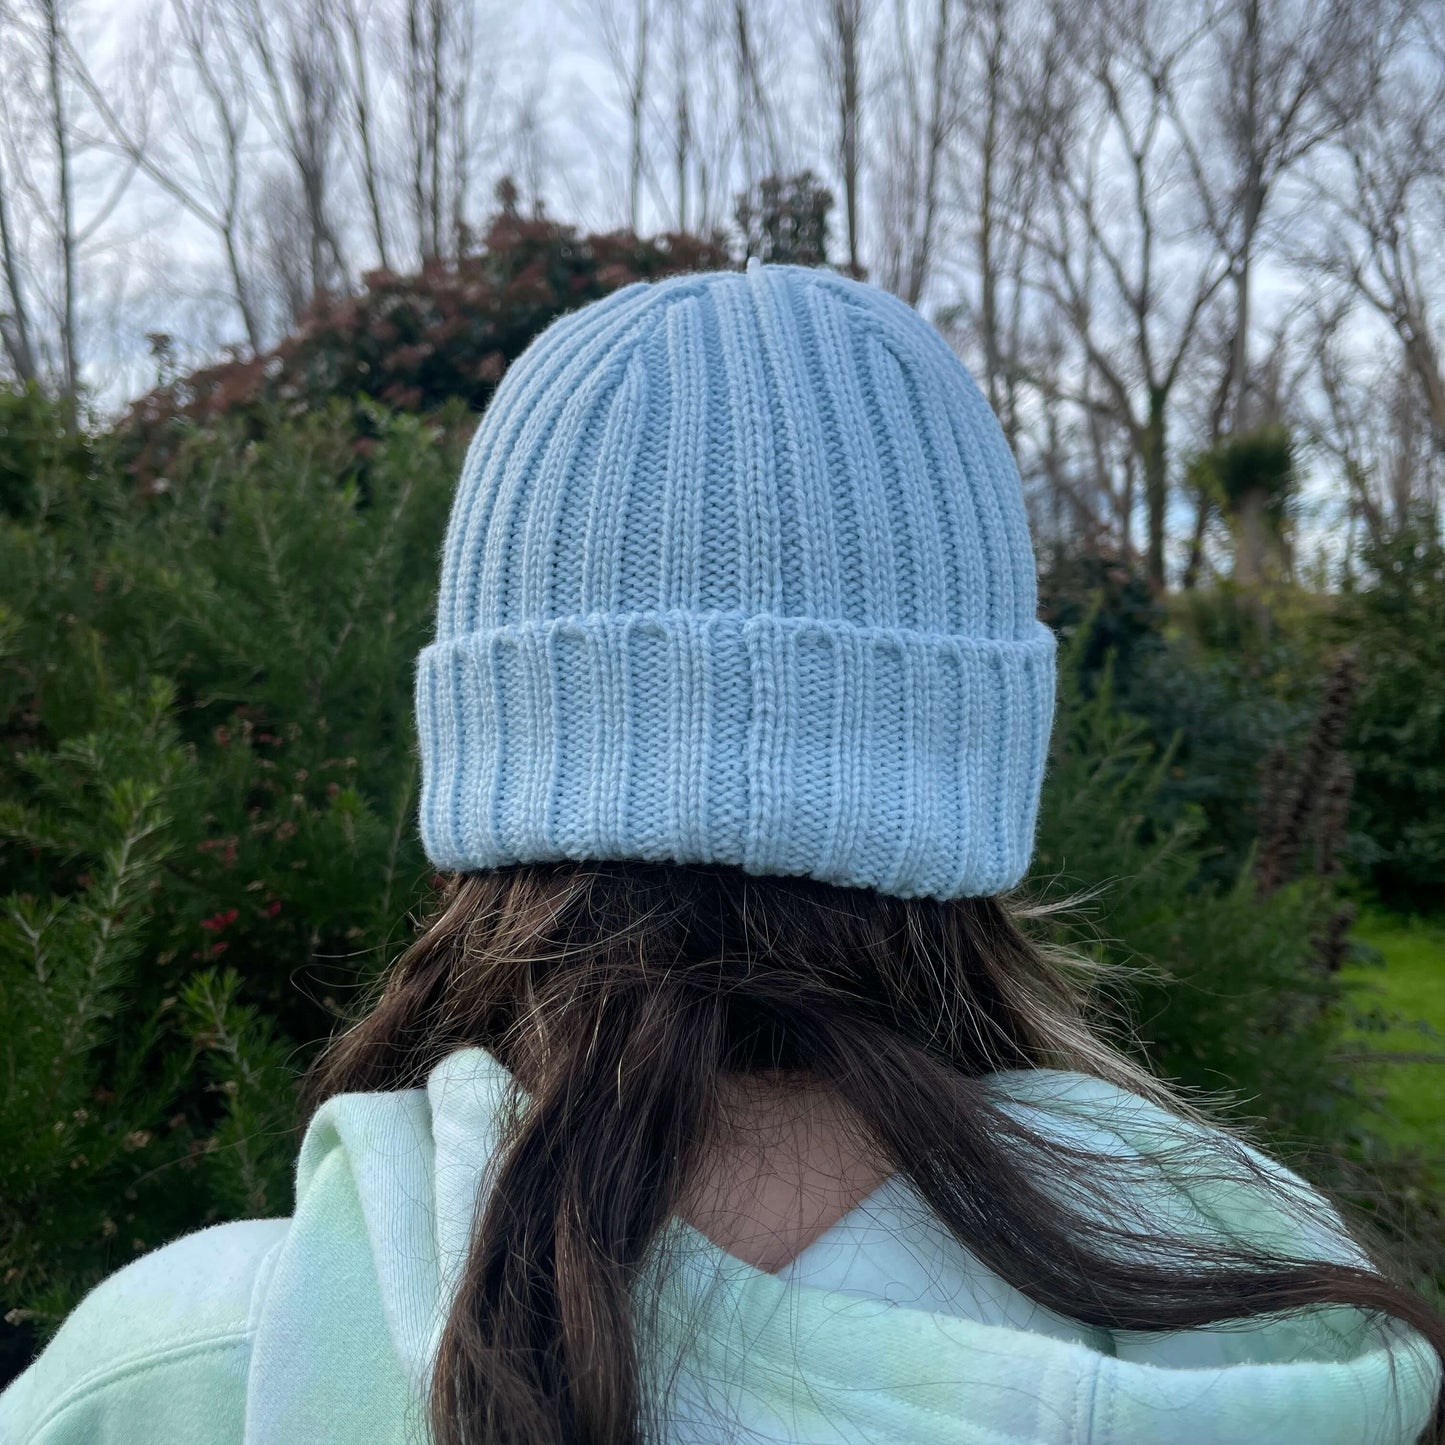 Back of child's head wearing light blue knit beanie.